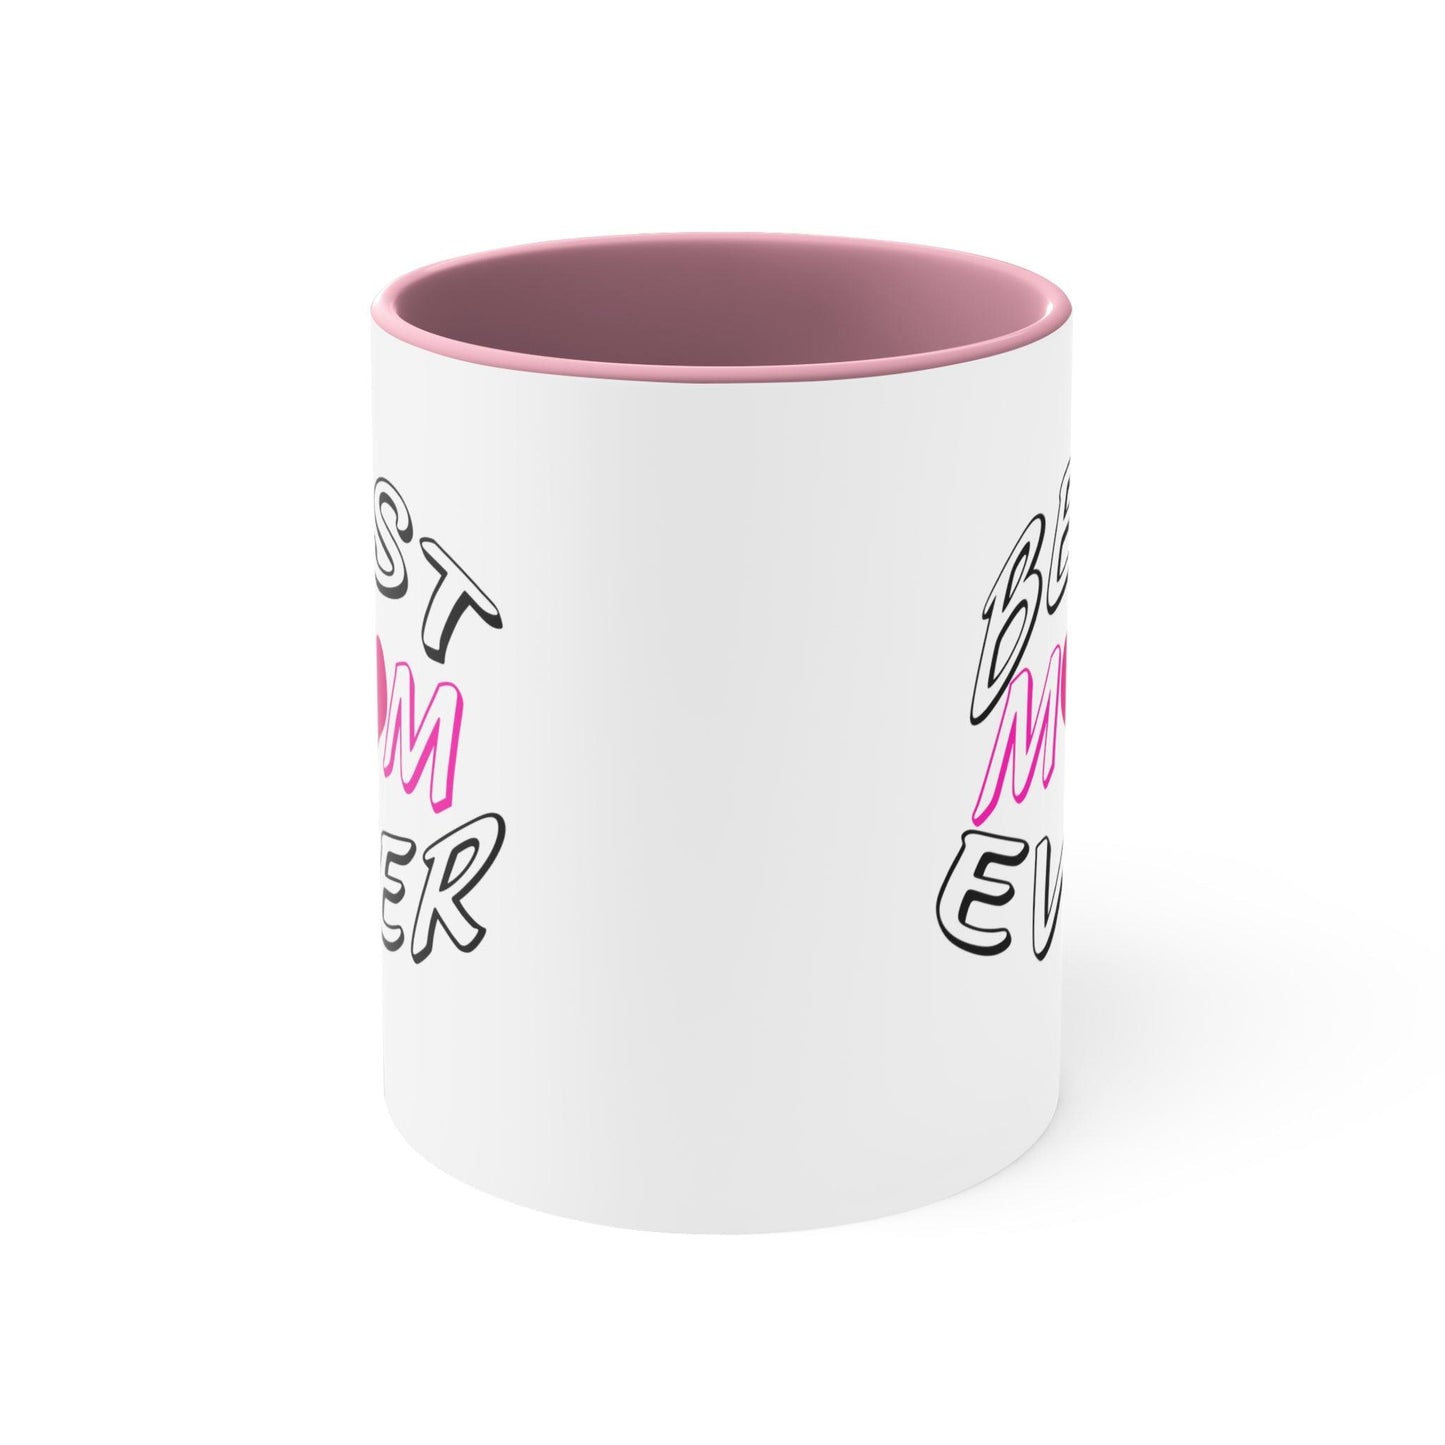 Best Mom Ever Accent Coffee Mug, 11oz - Giftsmojo